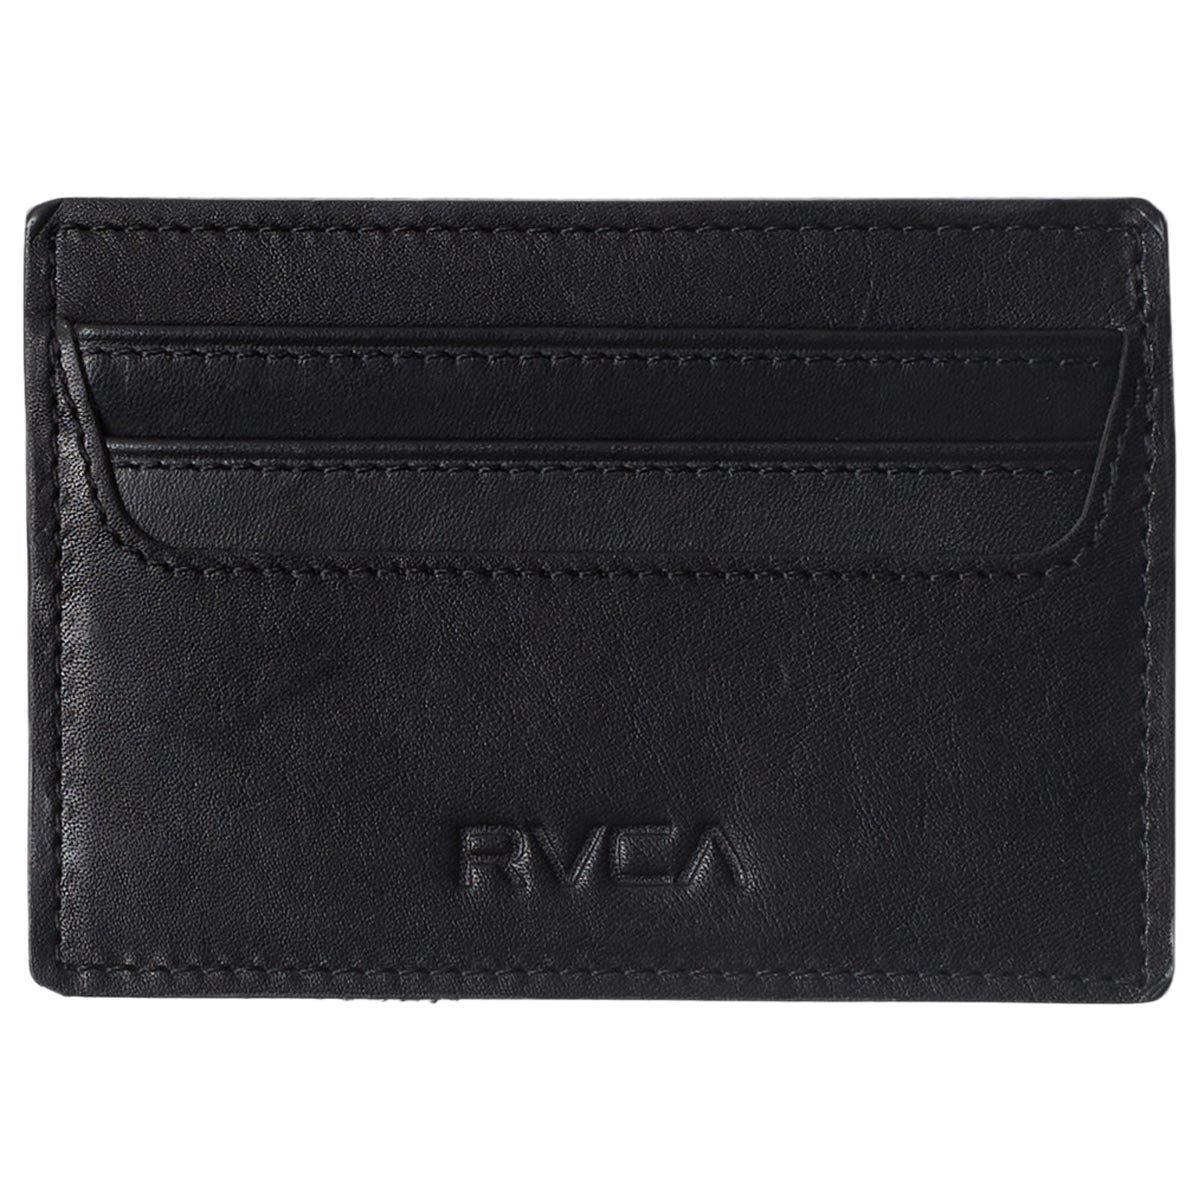 RVCA Balboa Card Wallet - Black image 1